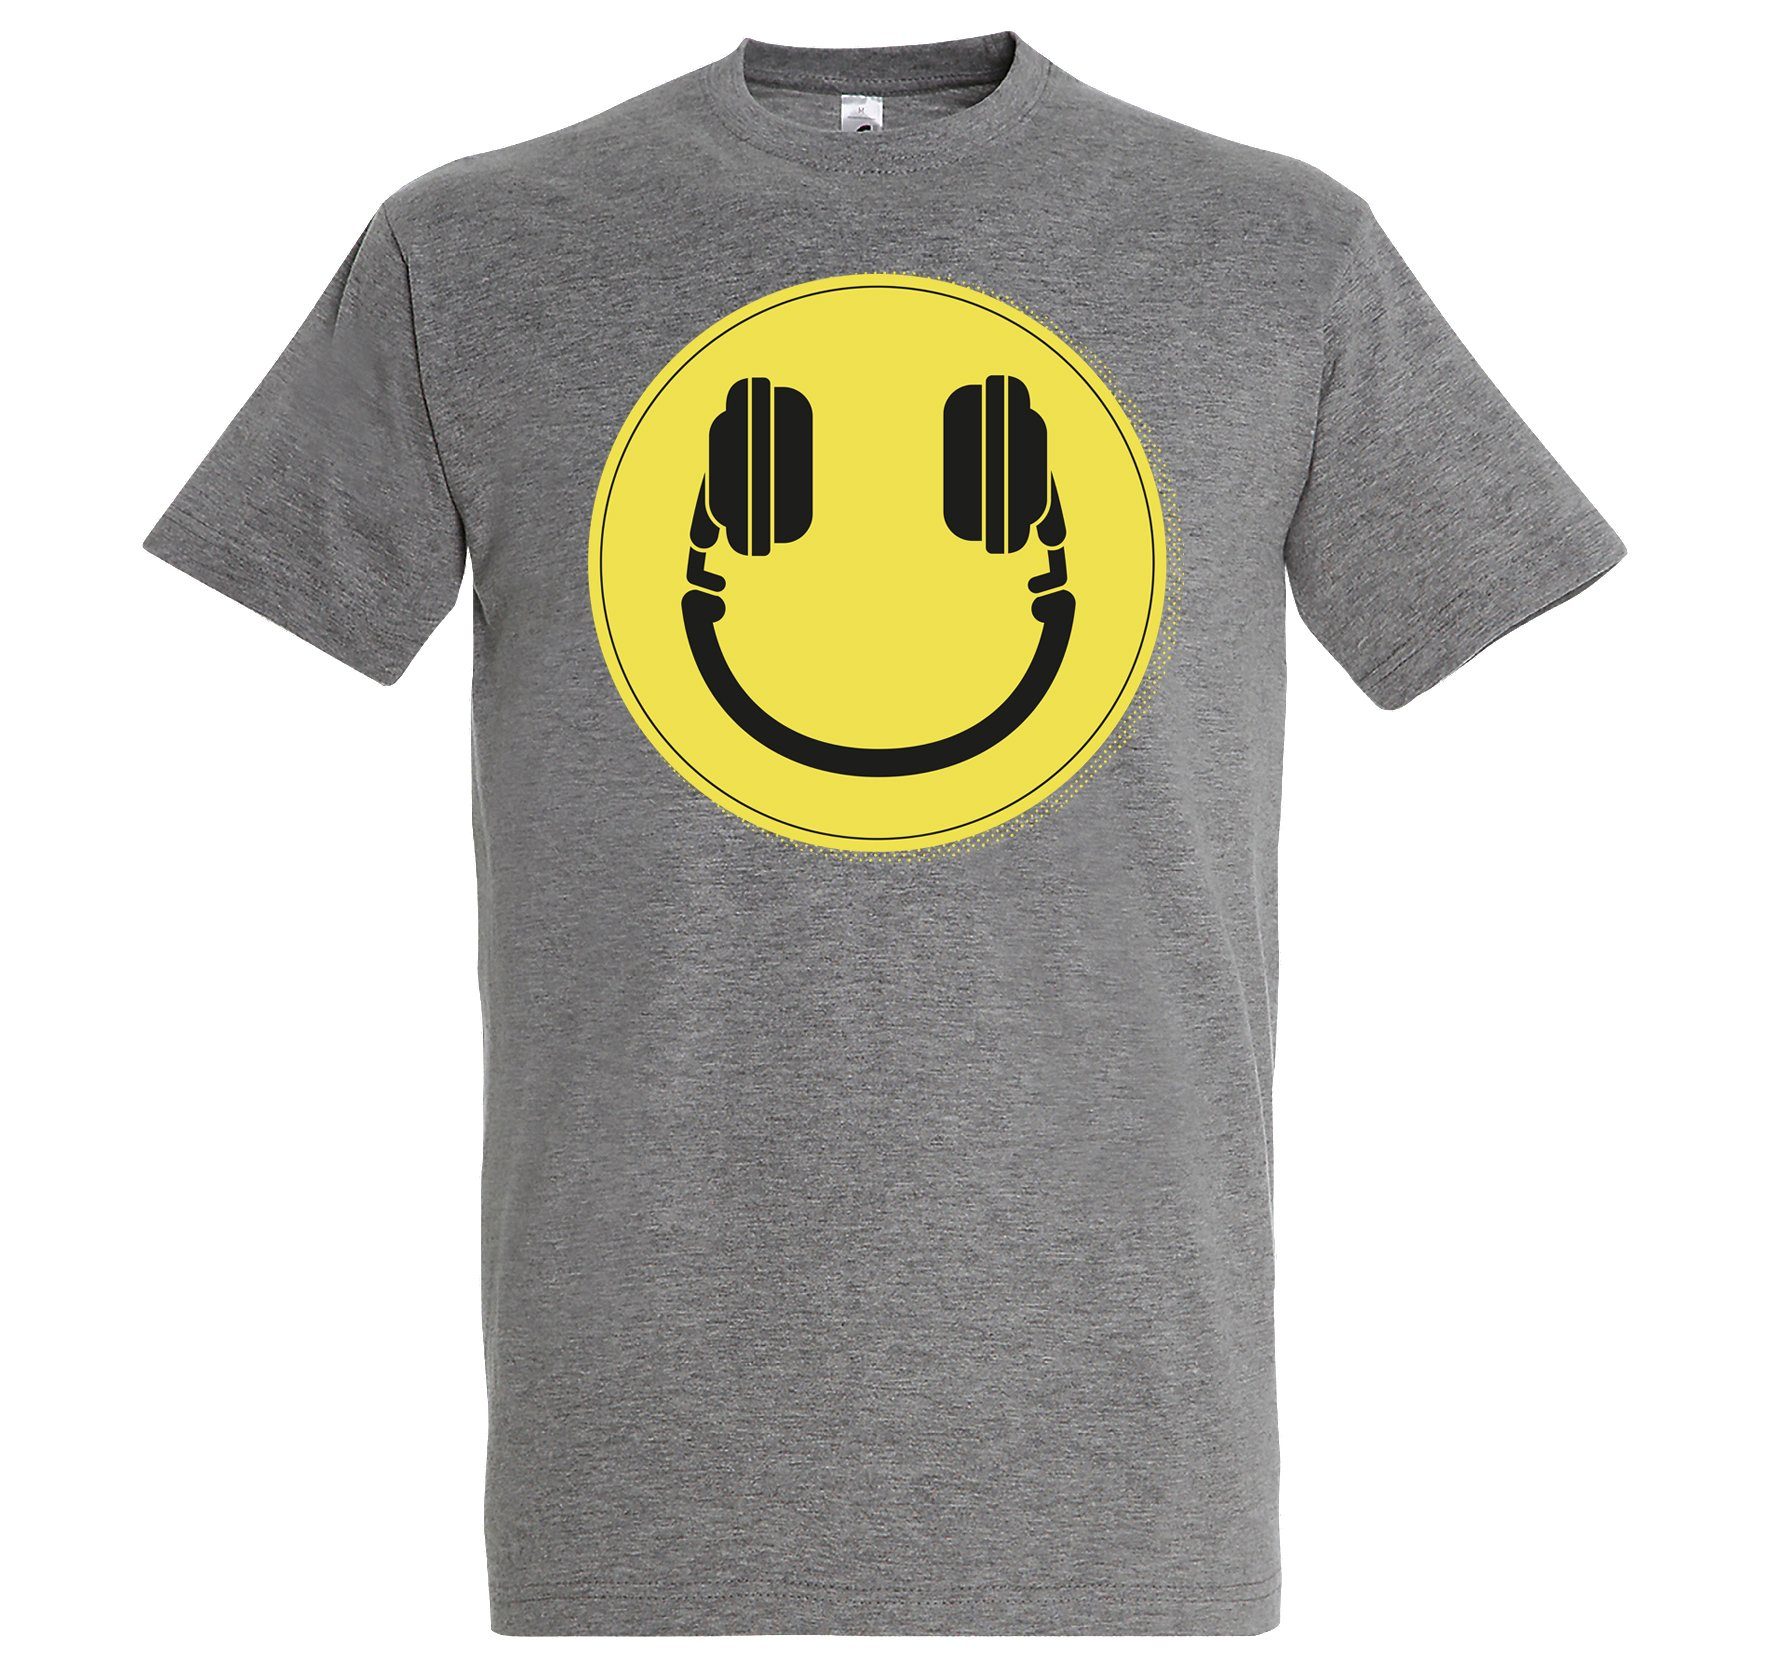 Grau Herren lustigem Headset Frontprint Designz T-Shirt Smile mit DJ T-Shirt Youth Smiley